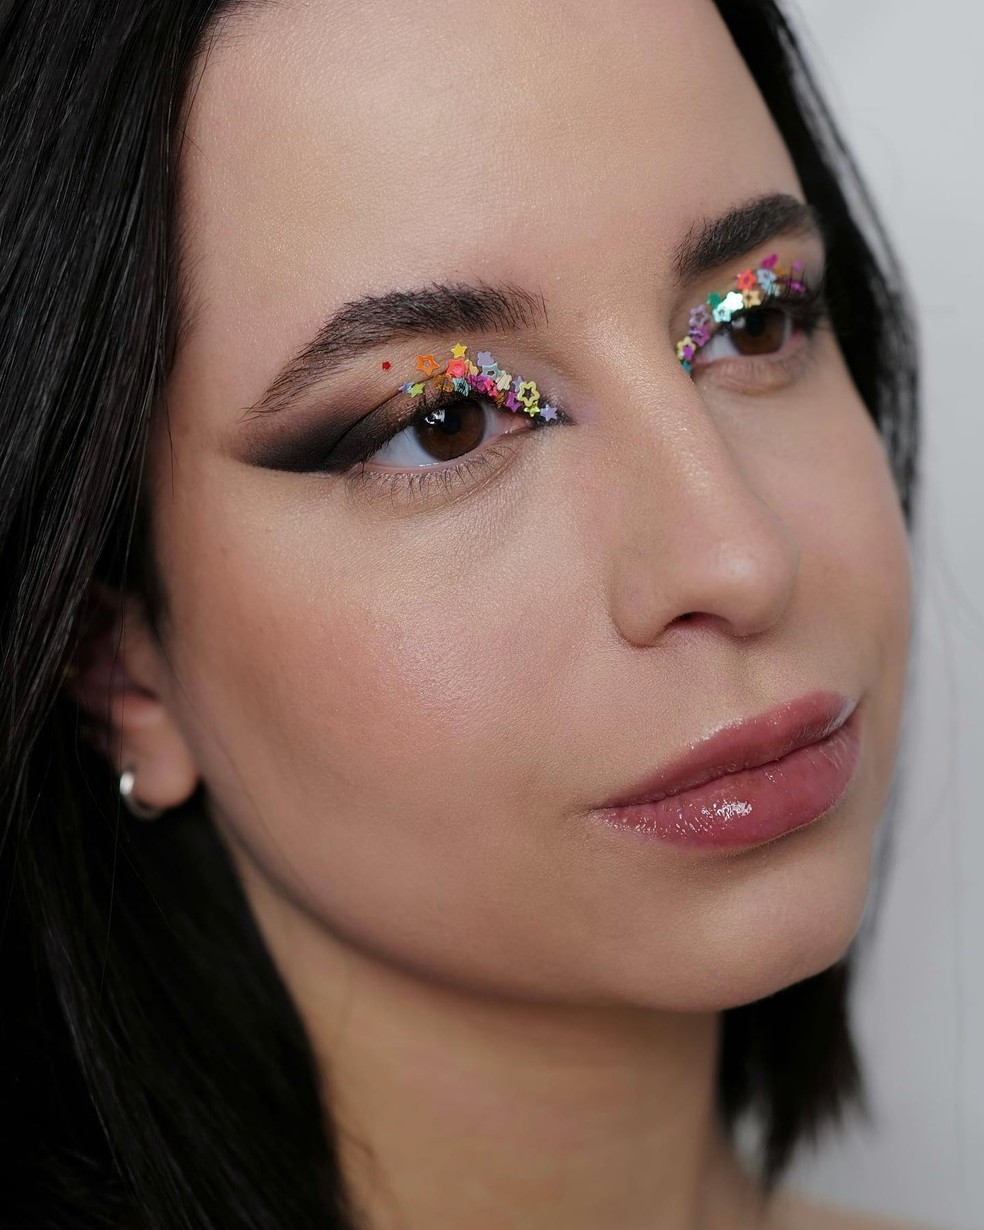 Maquiagem com glitter — Foto: Instagram @carolinacarpegiani